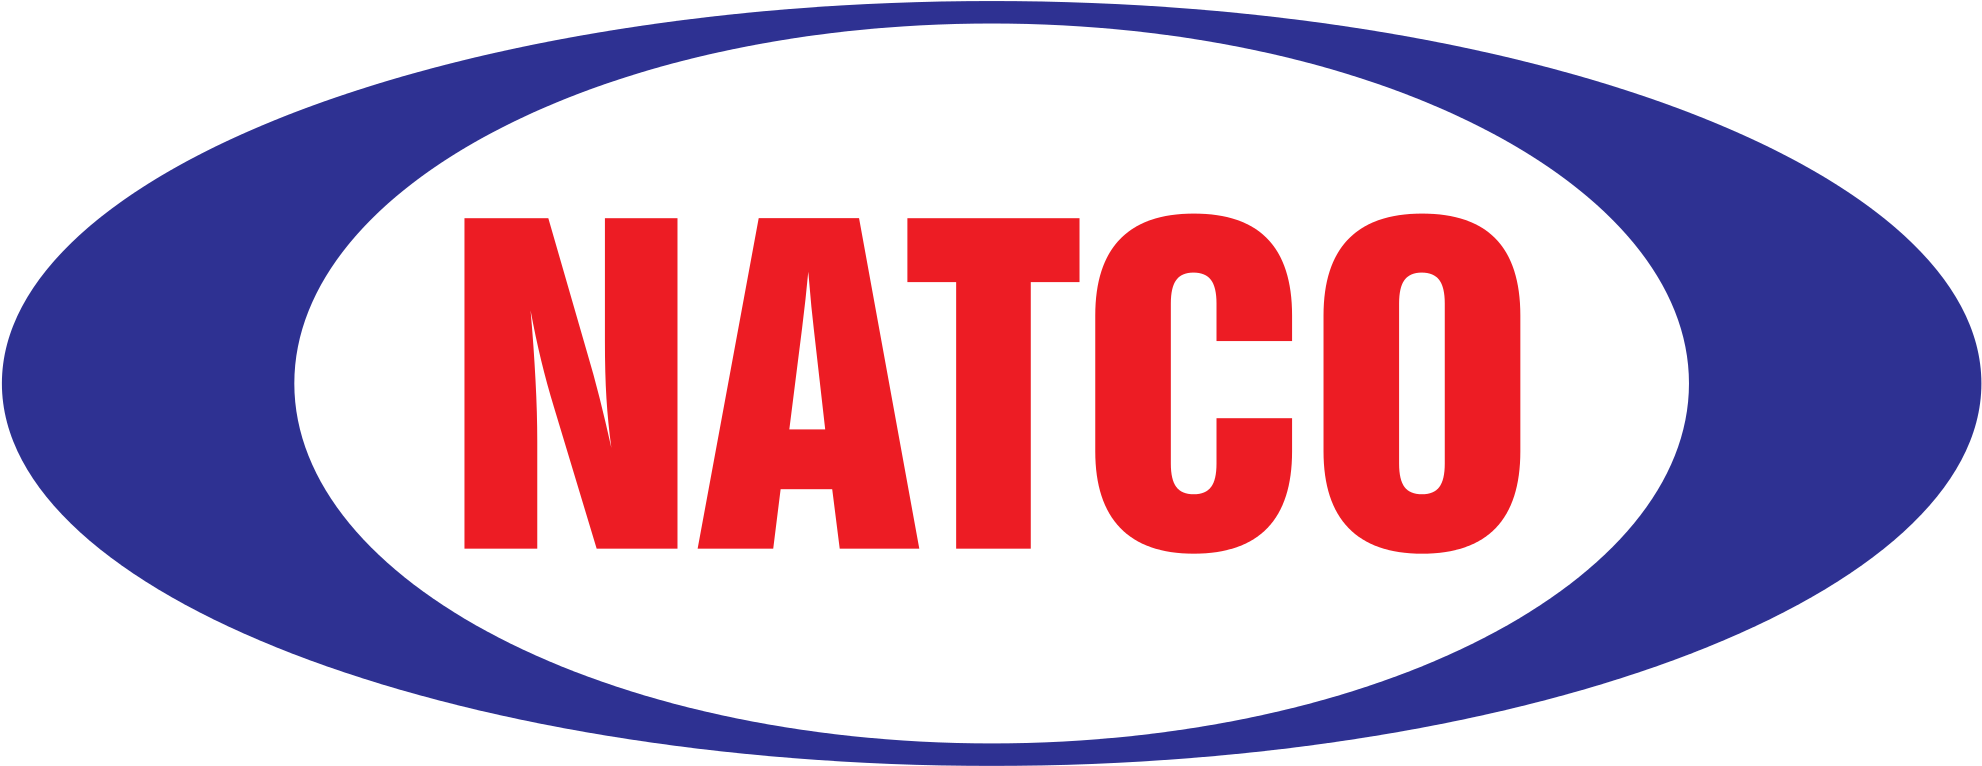 Natco Pharma Buyback - Natco Pharma Limited Logo Clipart (2000x785), Png Download